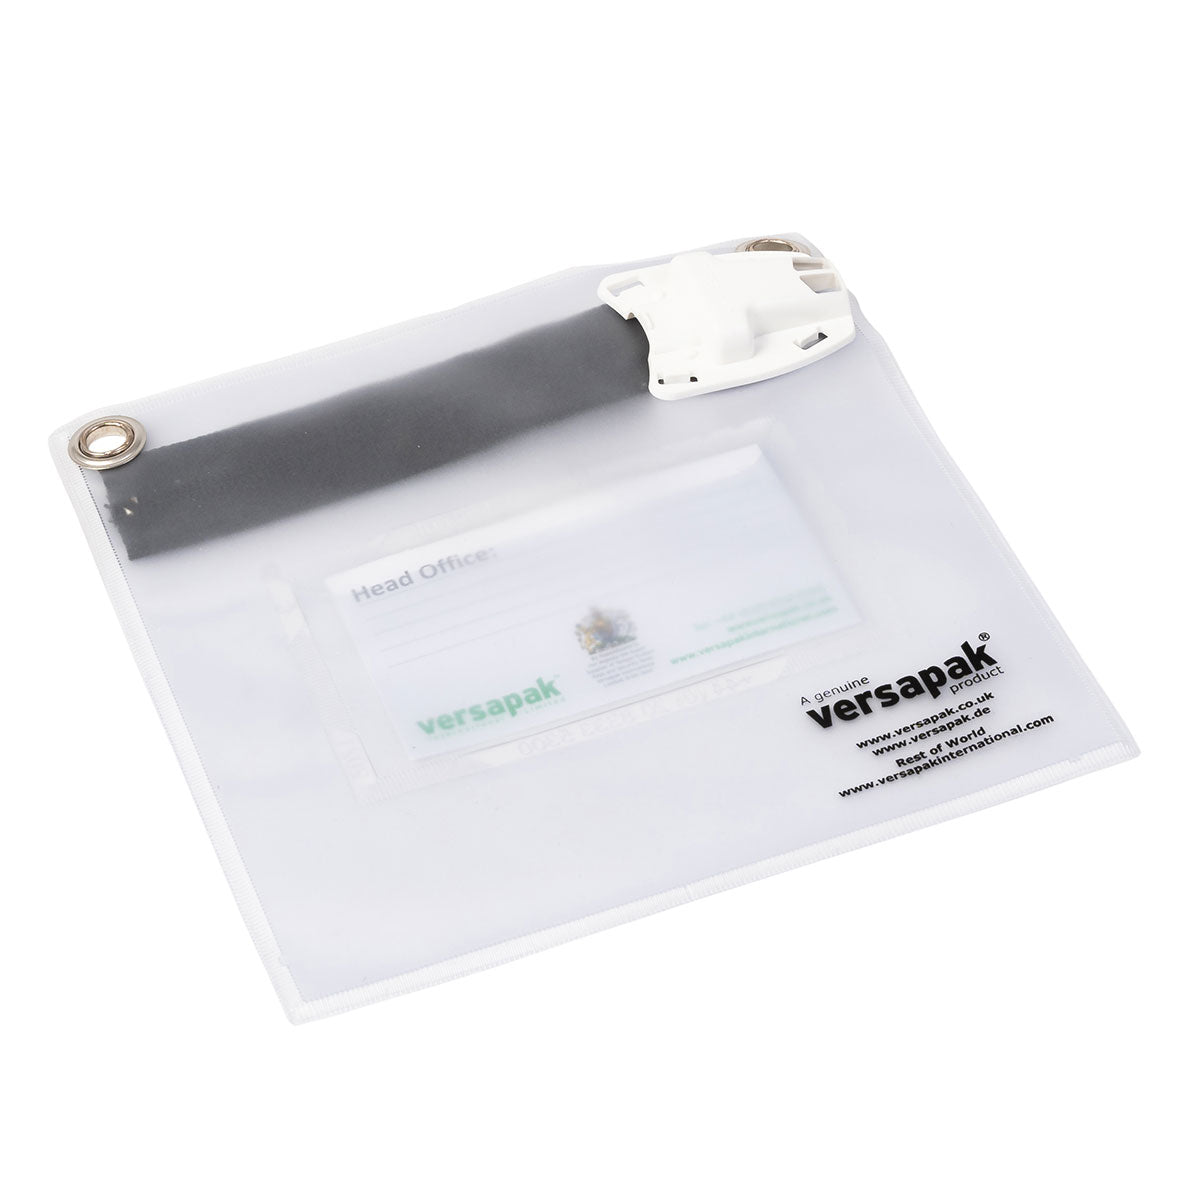 Versapak Transparent Wallet - Keys and Items Rear